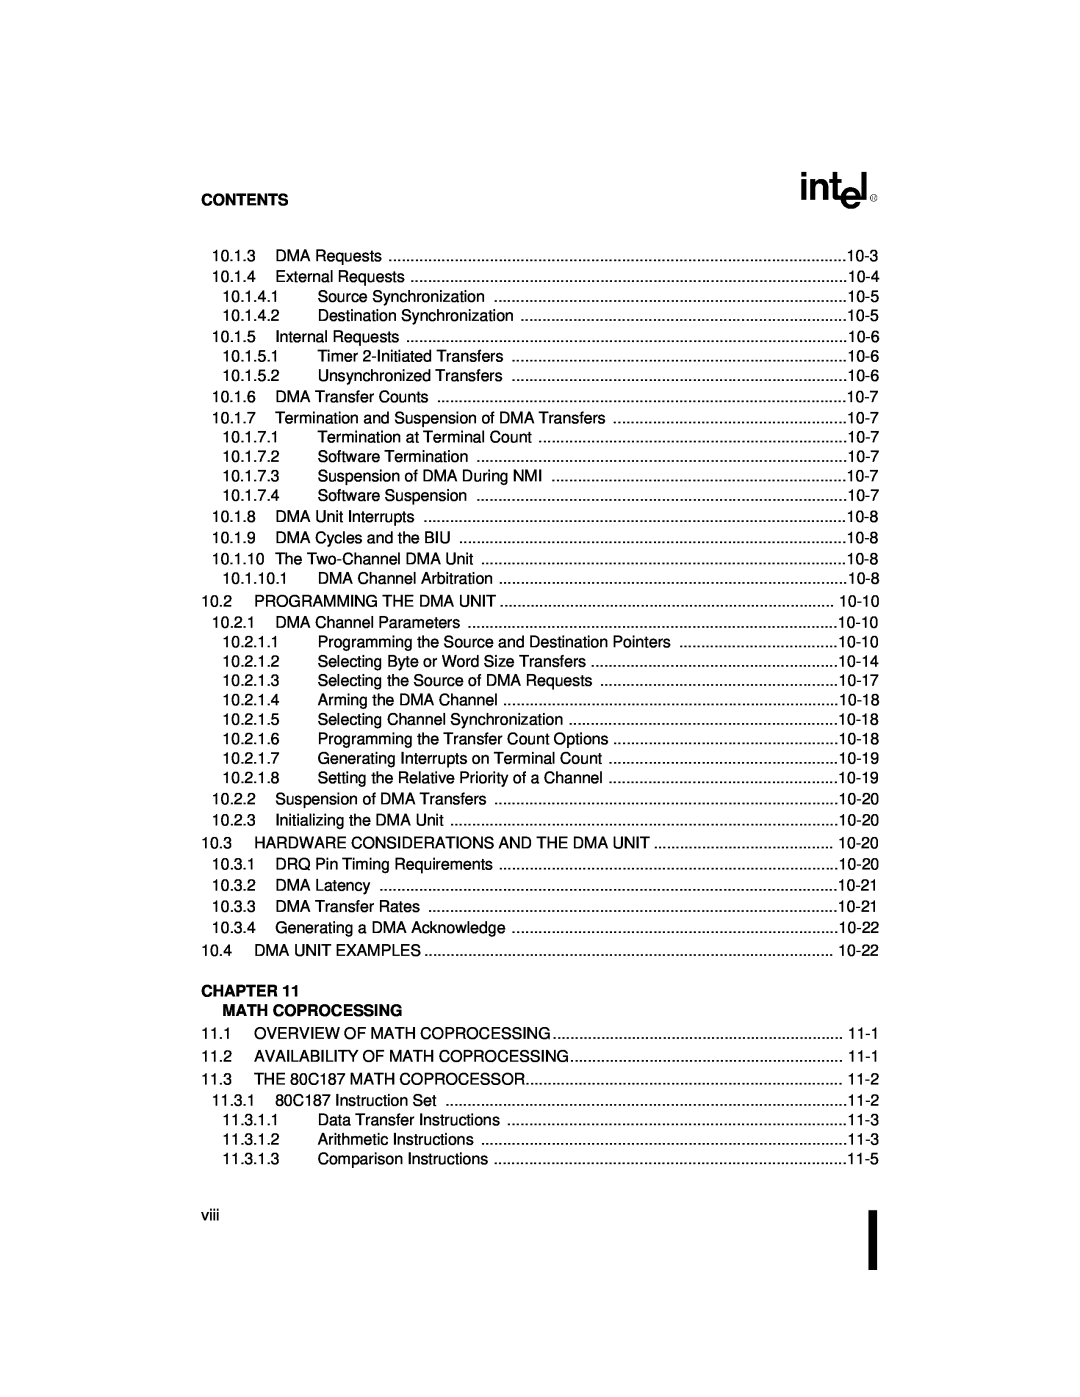 Intel 80C186XL, 80C188XL user manual Contents, Chapter, Math Coprocessing 